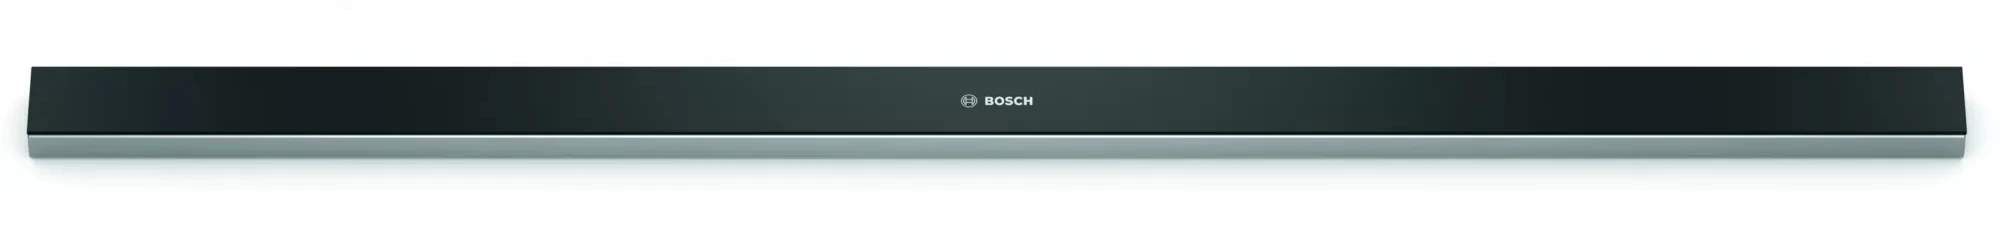 Bosch DSZ4986 dodatna oprema za aspirator